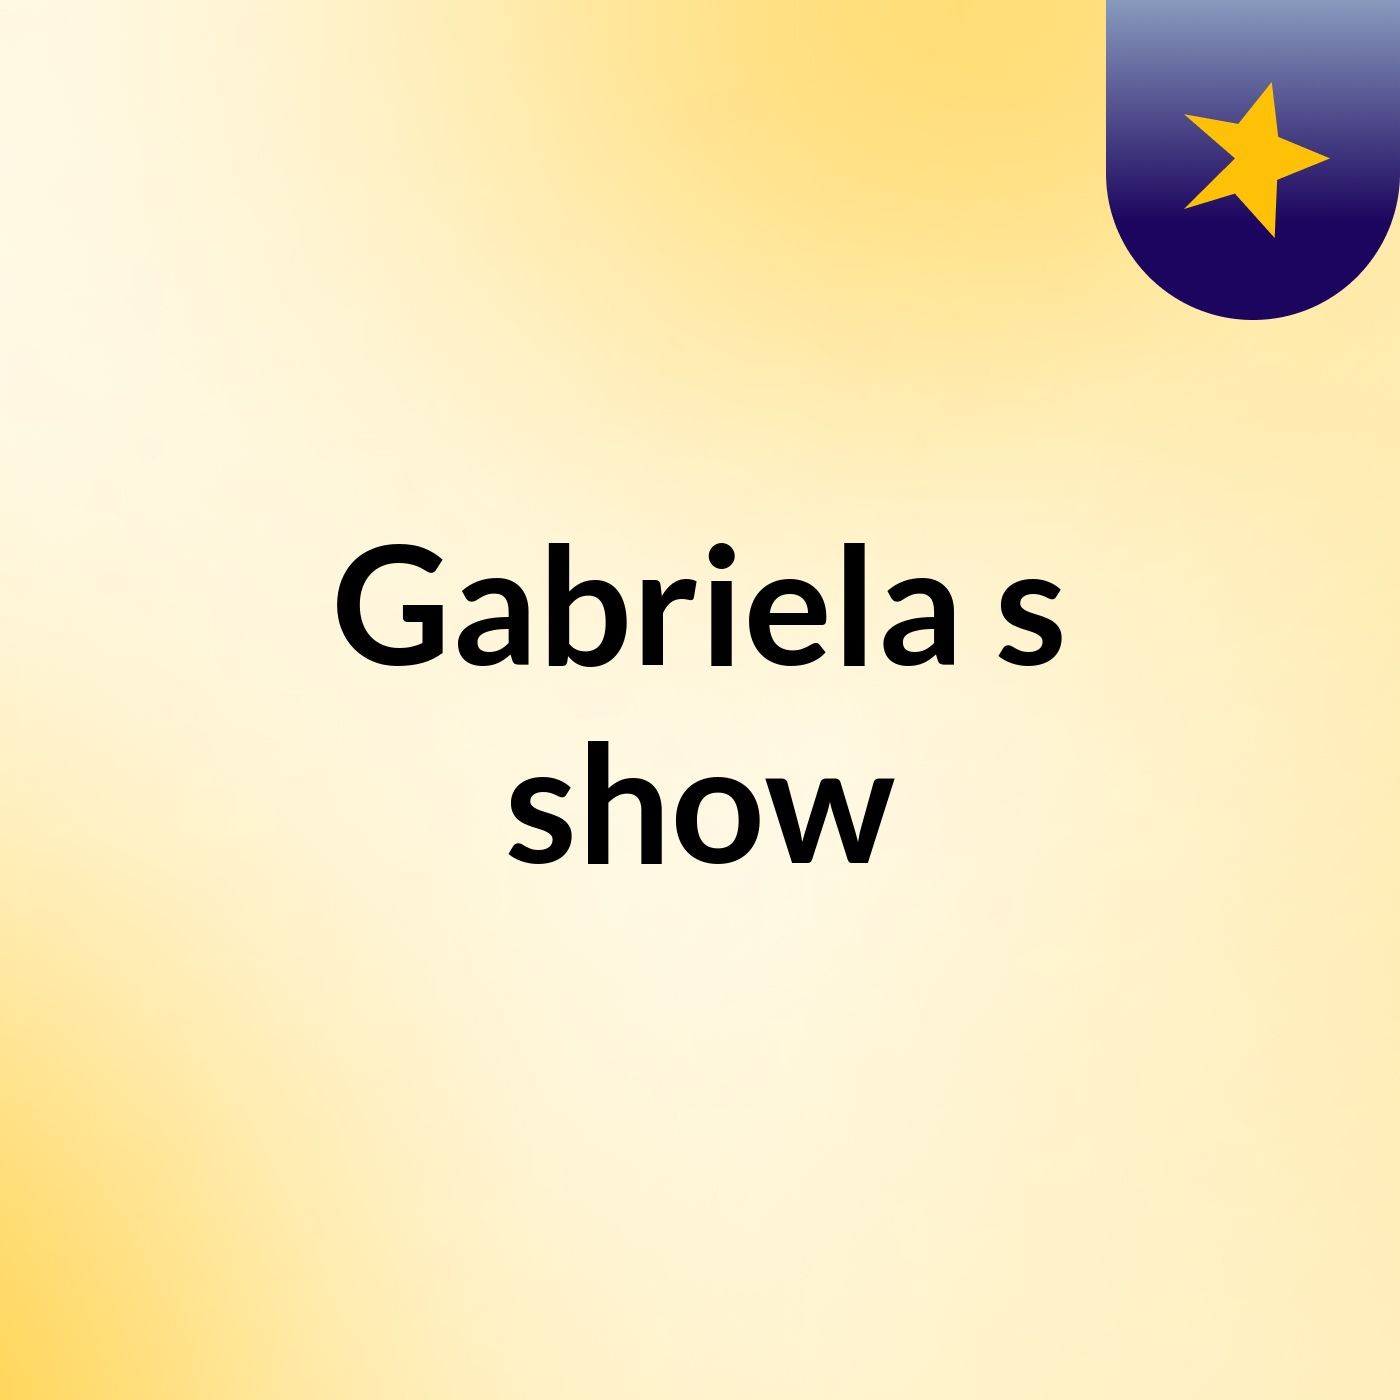 Gabriela's show